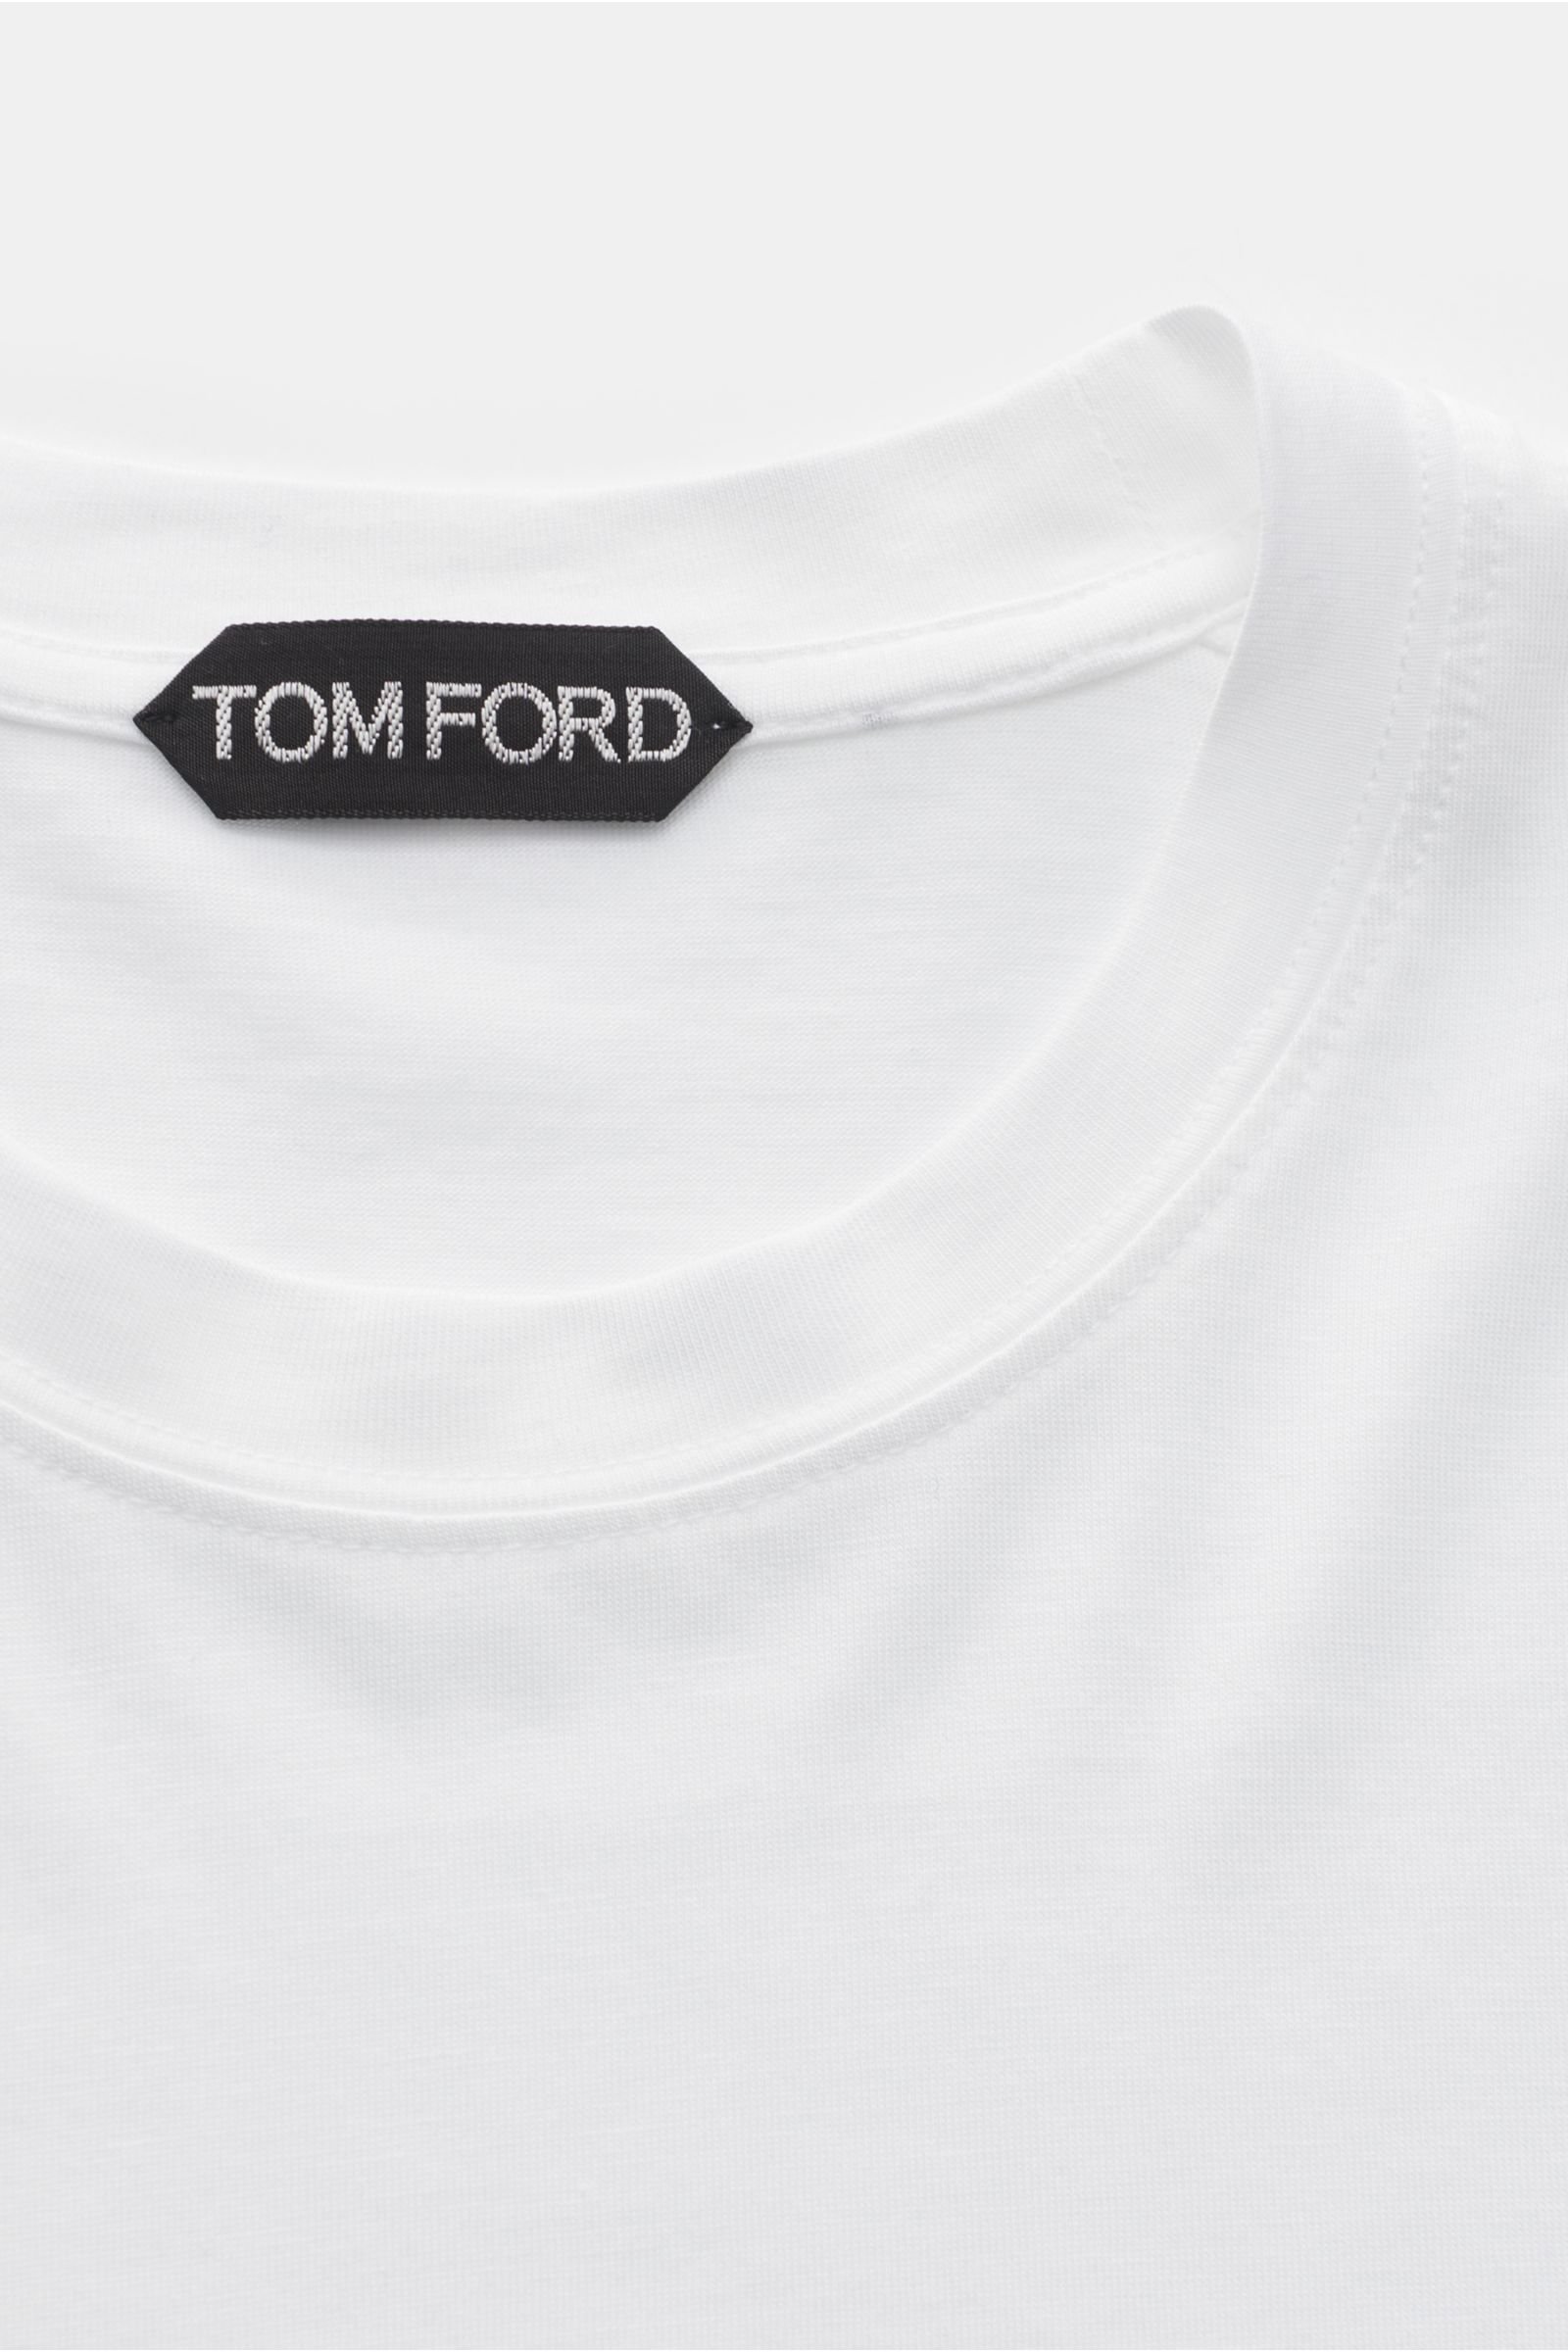 TOM FORD crew neck T-shirt white | BRAUN Hamburg